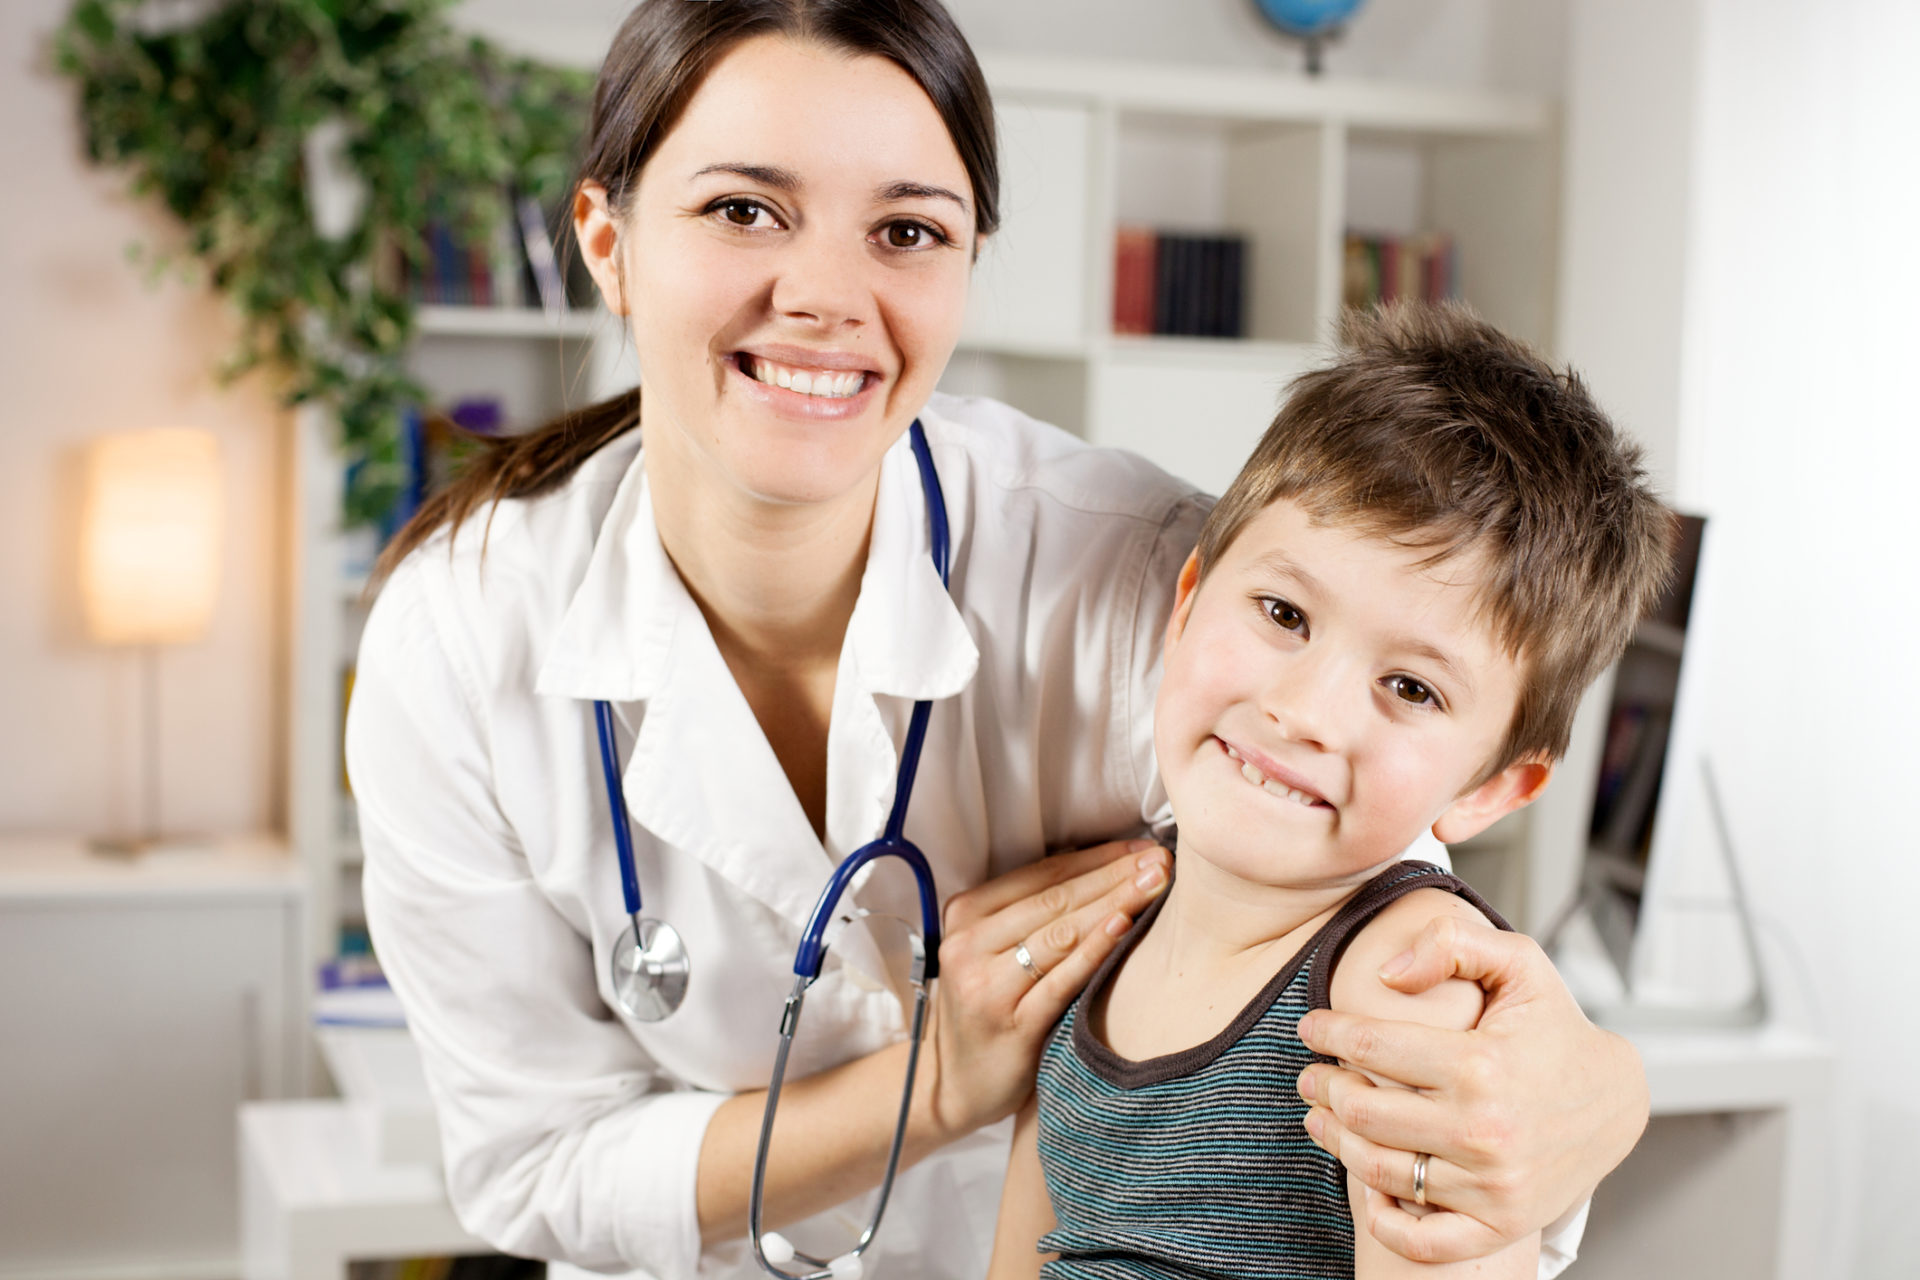 NEW MOCA-Peds Option Coming in 2019 for Pediatrics